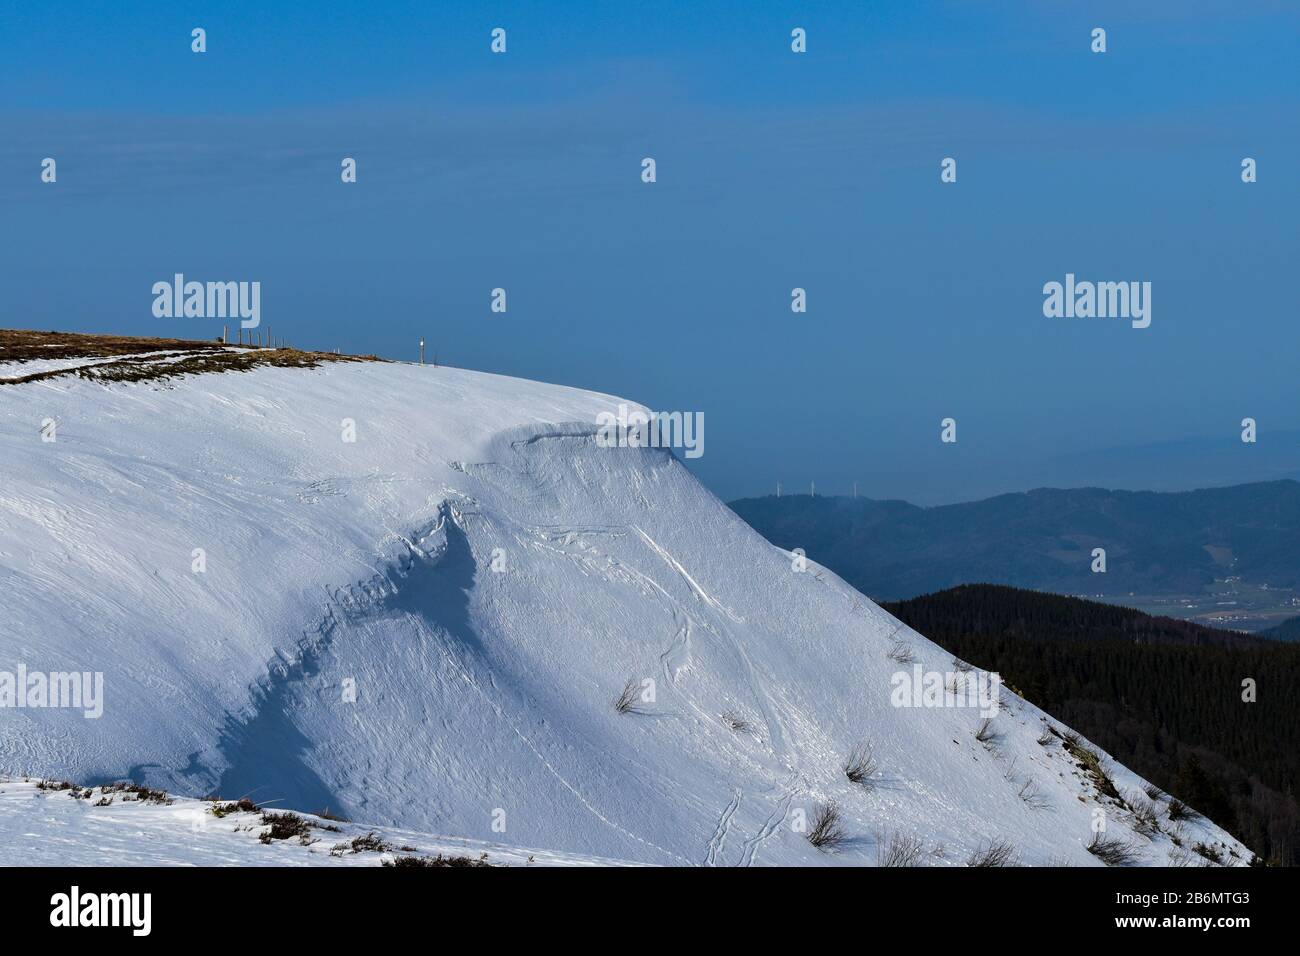 Pico nevado de montaña con deriva de nieve. Foto de stock